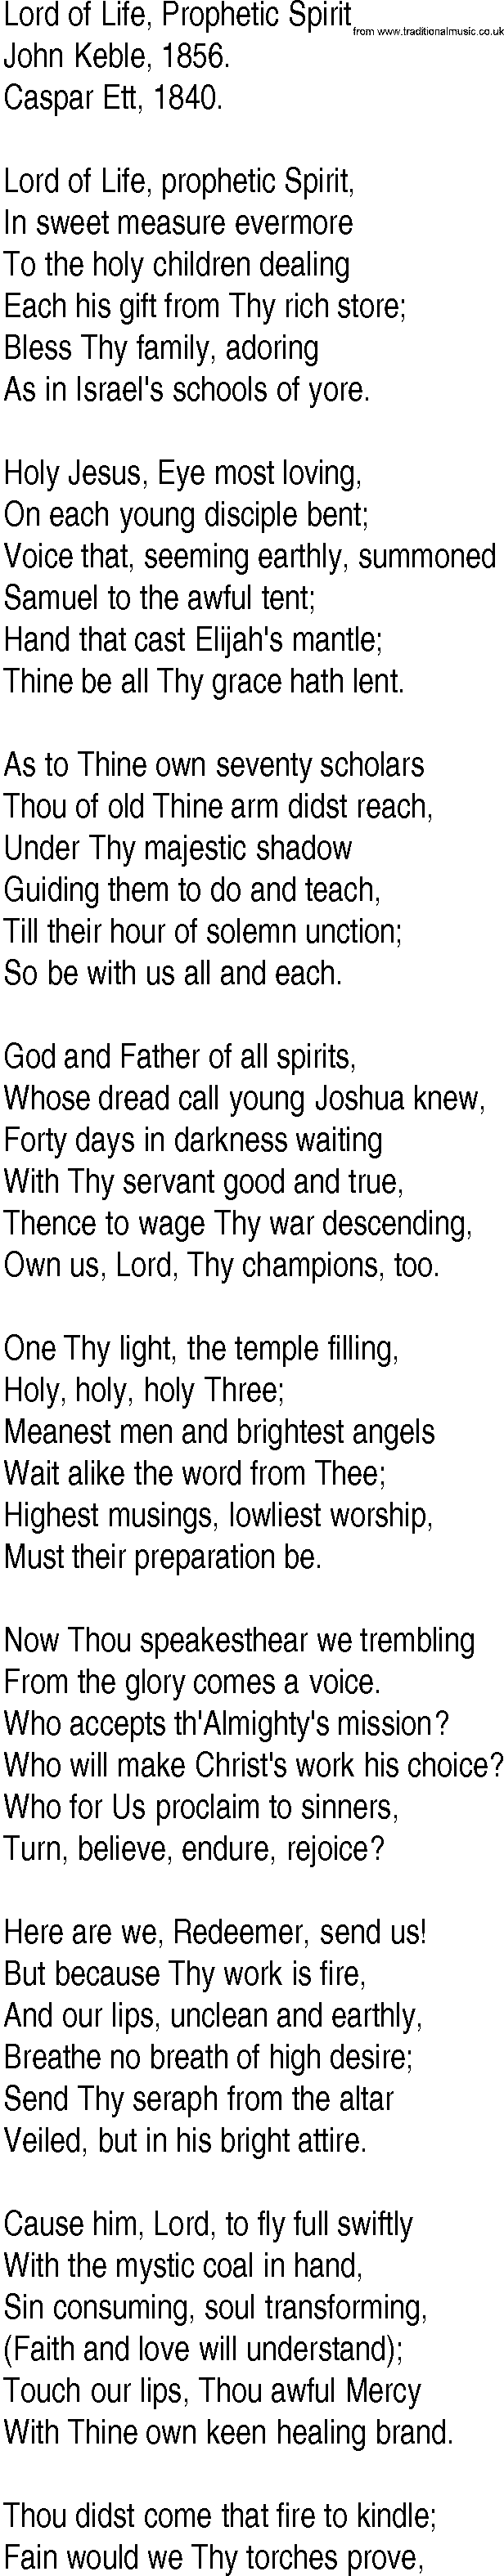 Hymn and Gospel Song: Lord of Life, Prophetic Spirit by John Keble lyrics